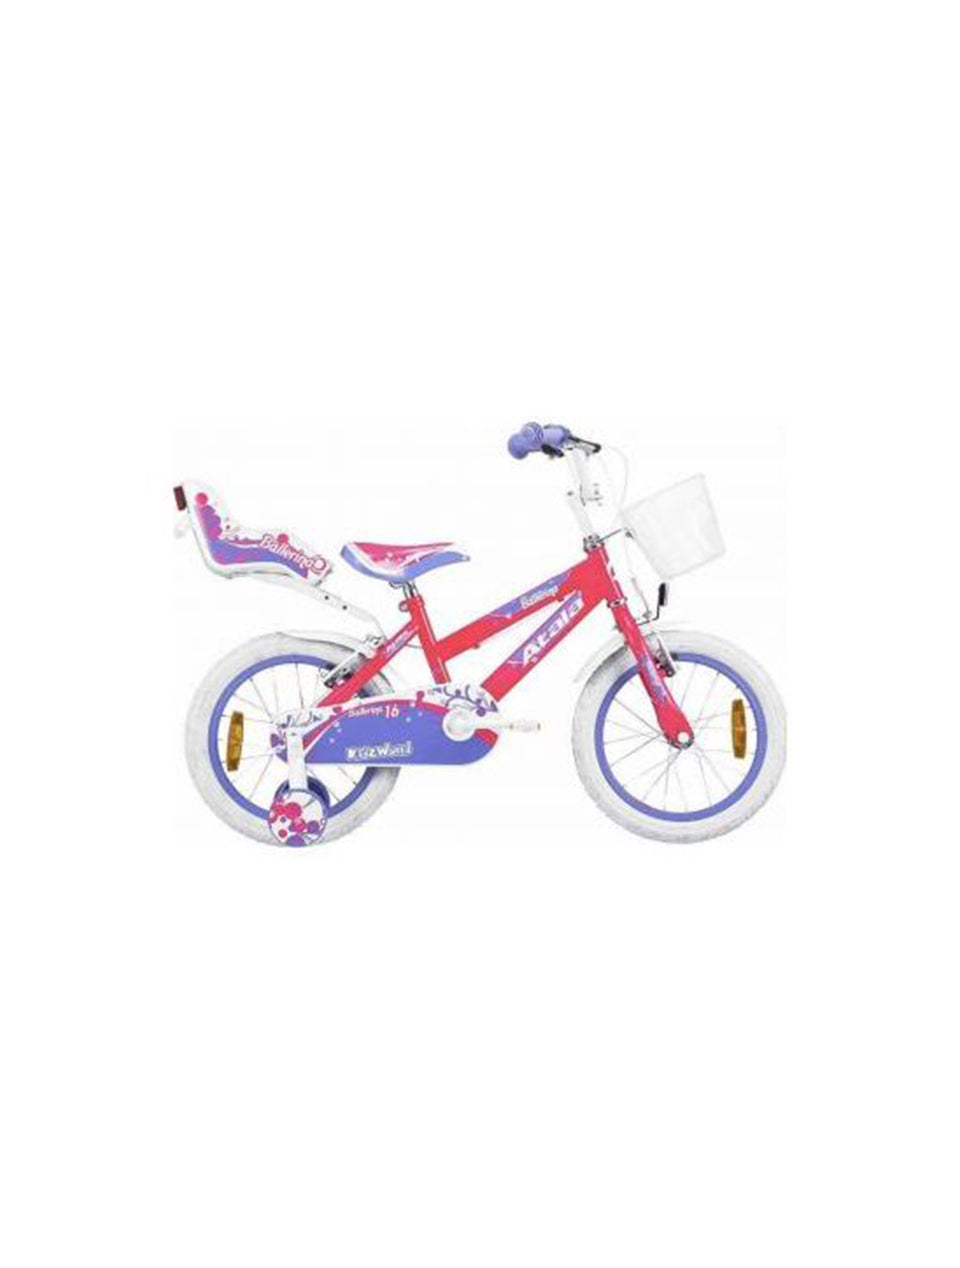 Atala Bicycle Gp-16 1S, 23, 0115205700 - Blue/Pink